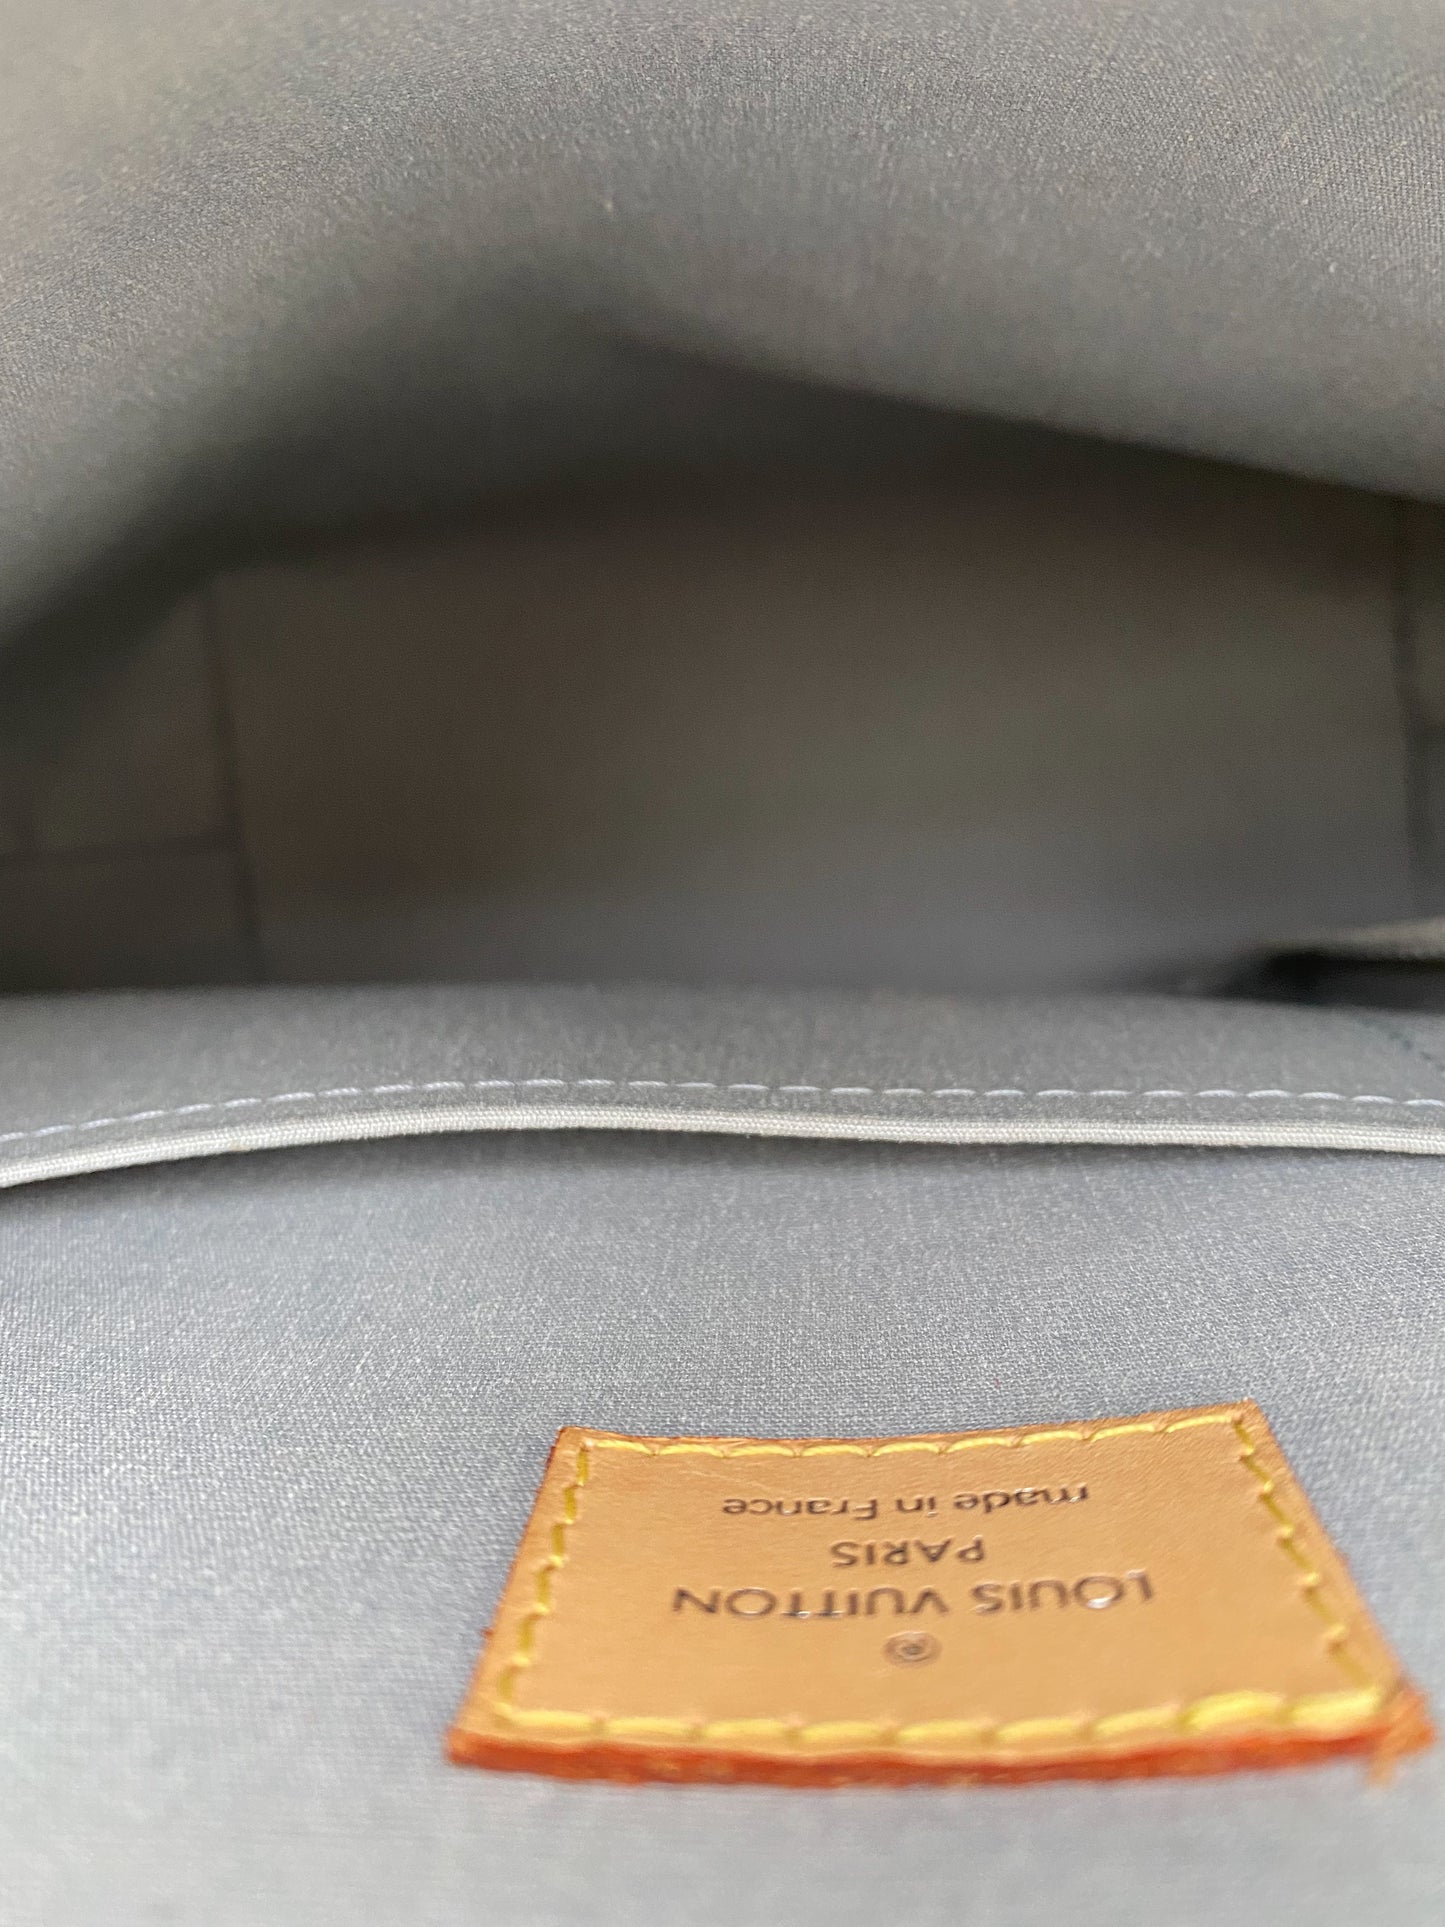 Deluxe Floating Blind Bag, Louis Vuitton Lockit Handbag 379427